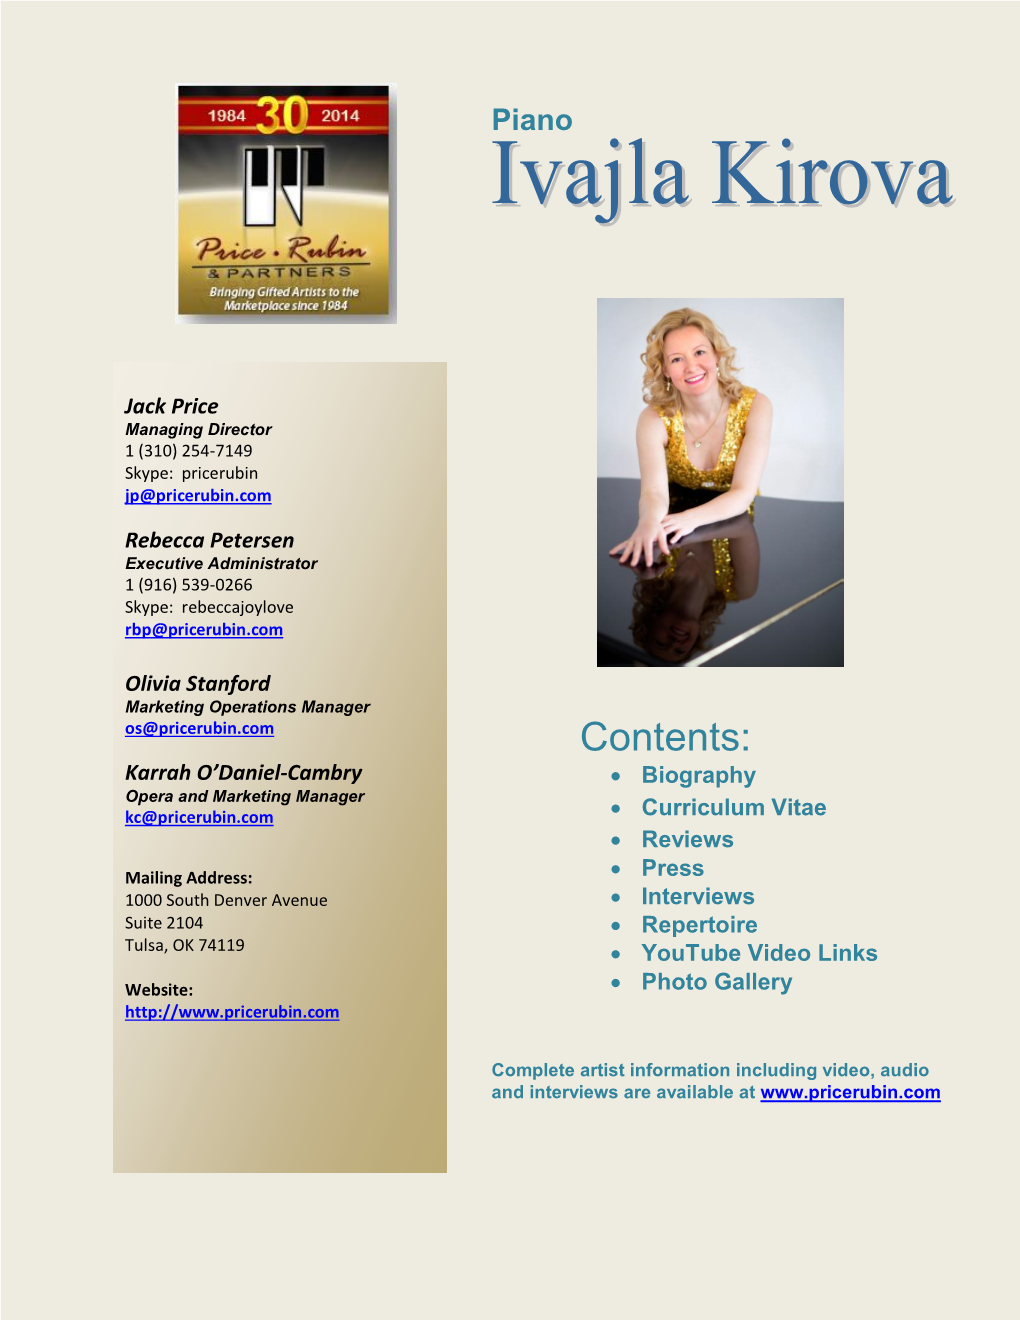 Ivajla Kirova – Biography